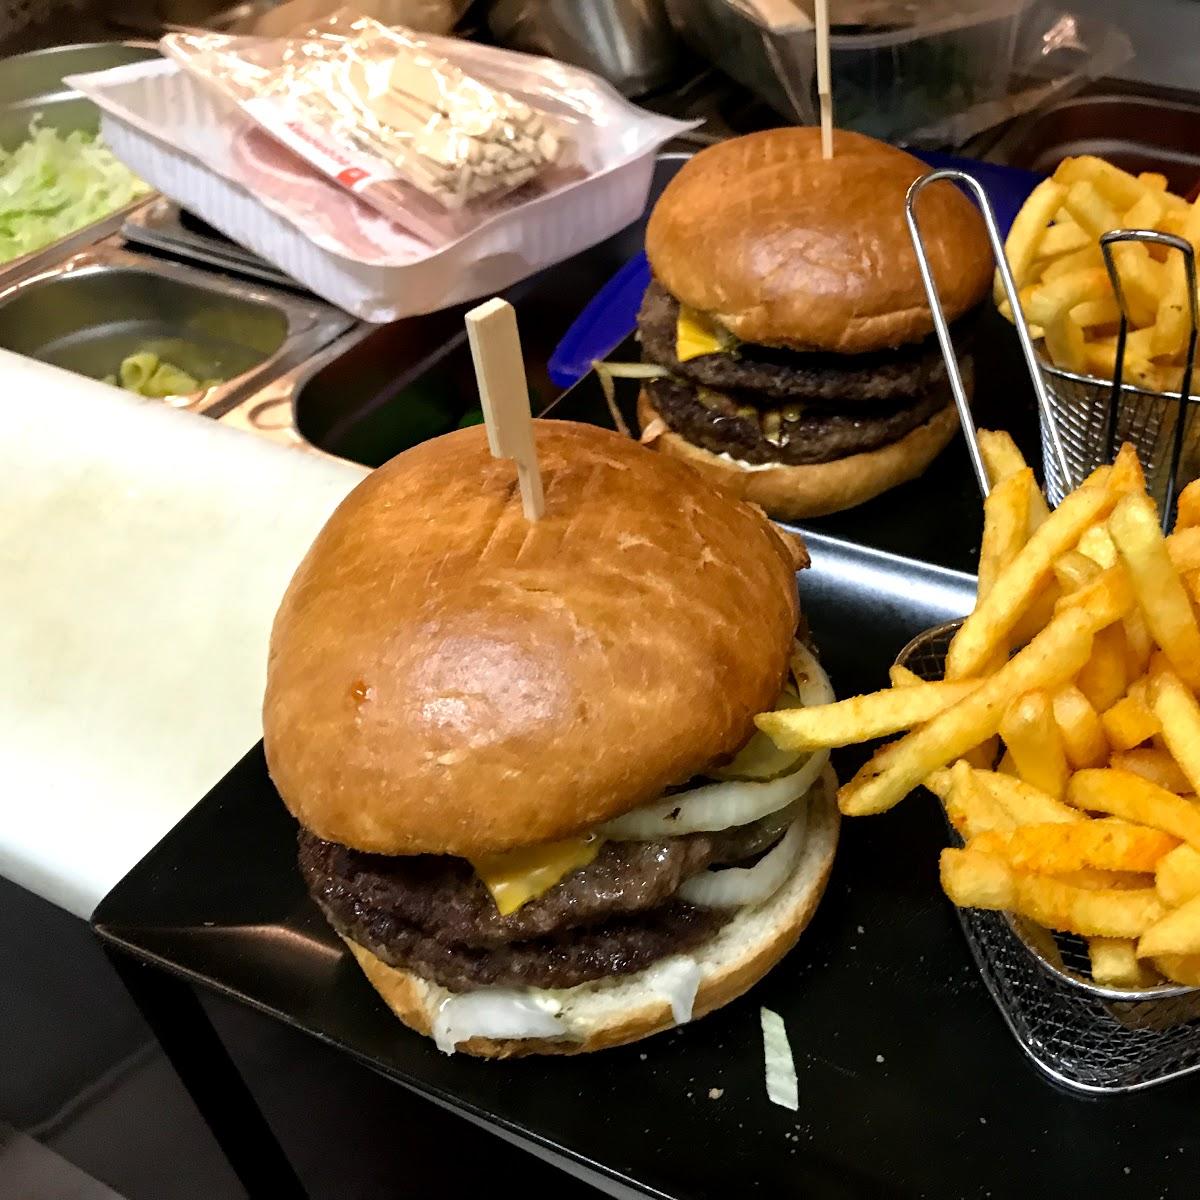 Restaurant "Burger Guru" in Dortmund